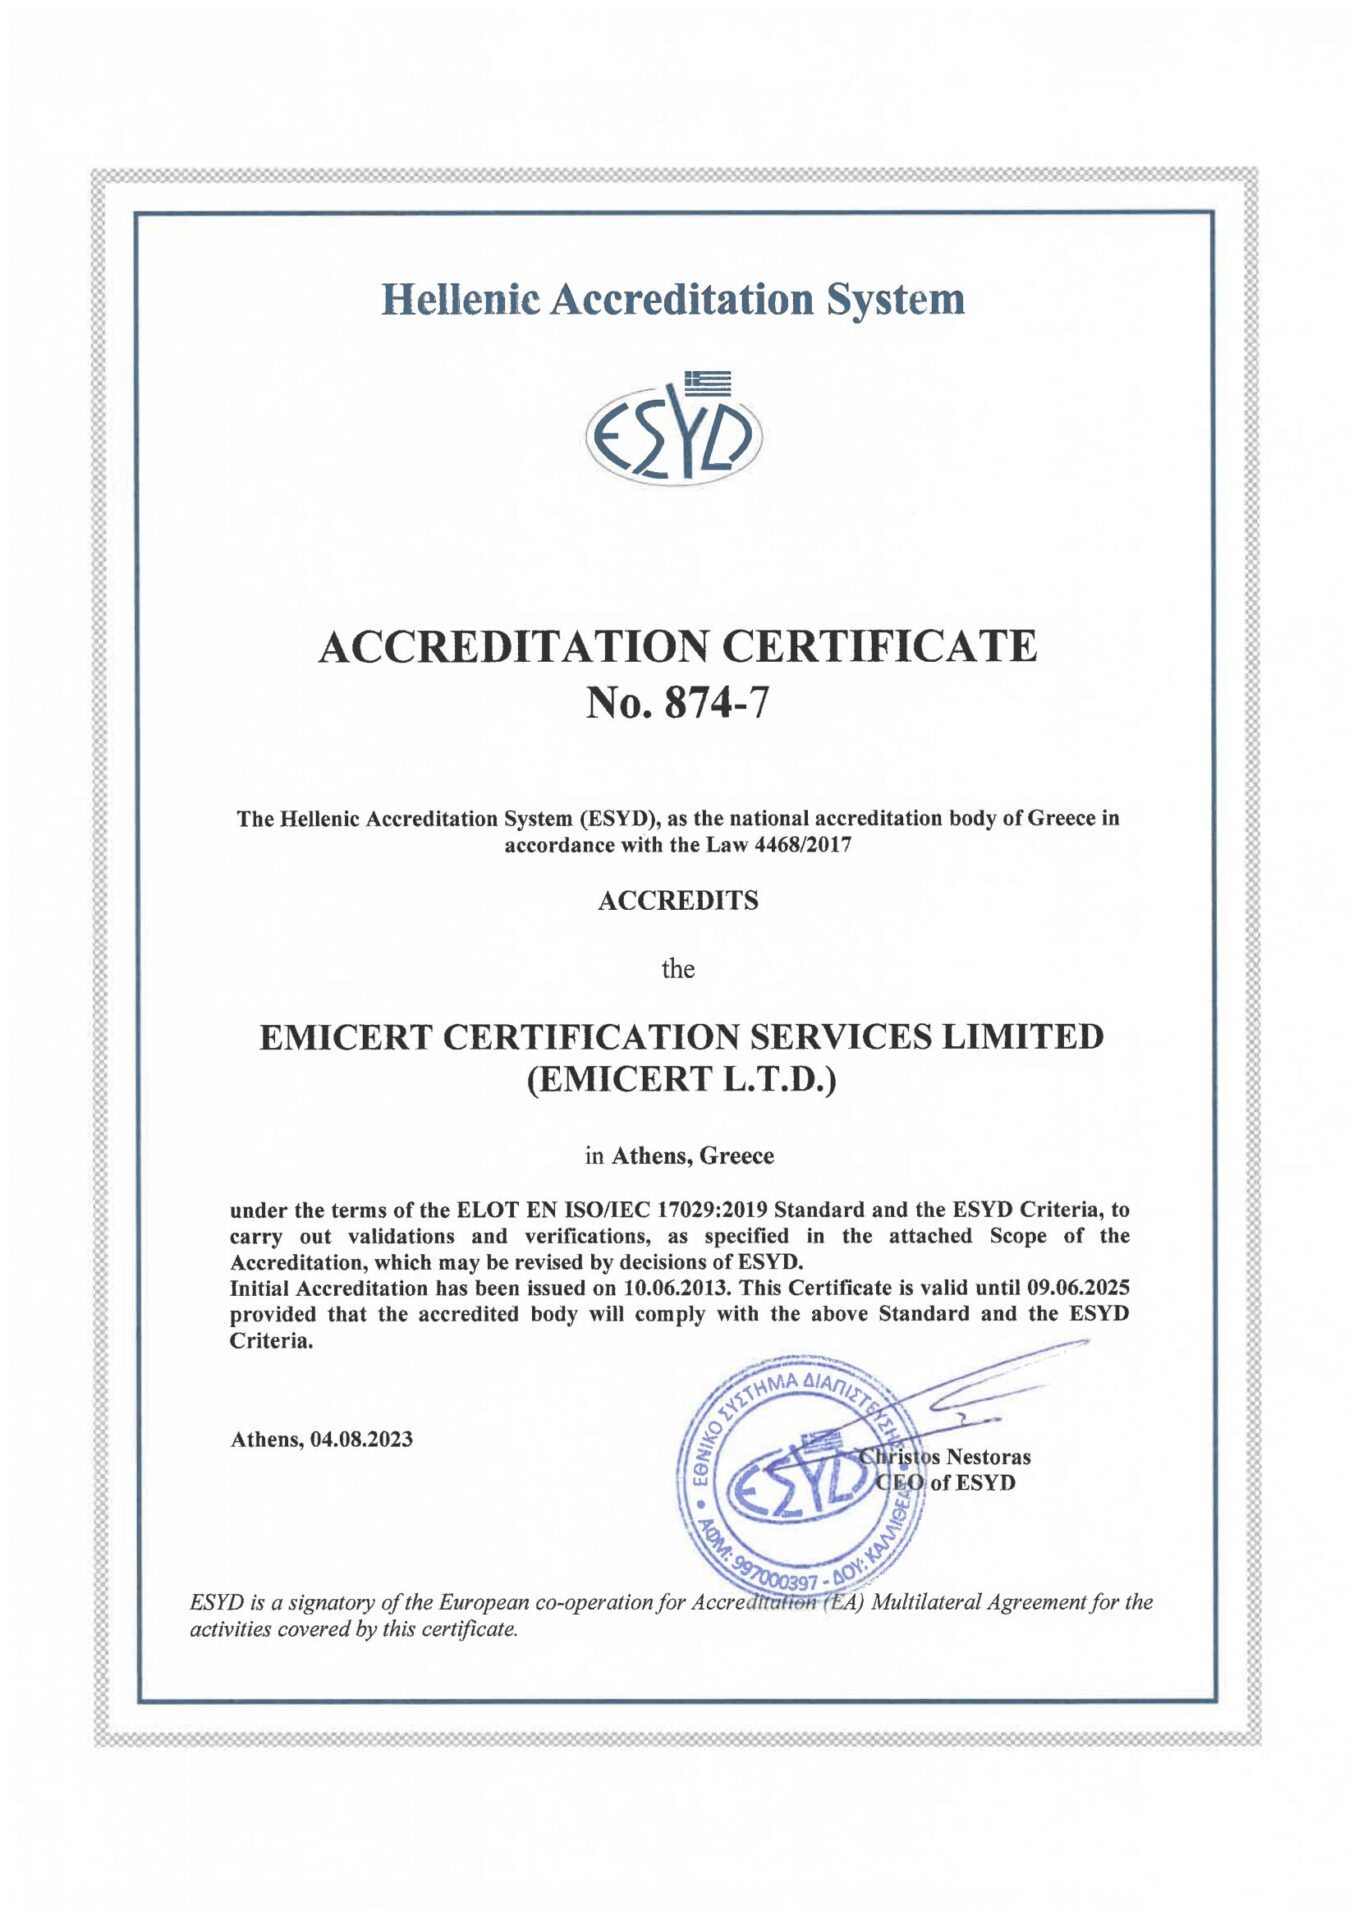 Accreditation Certificate No. 874-7